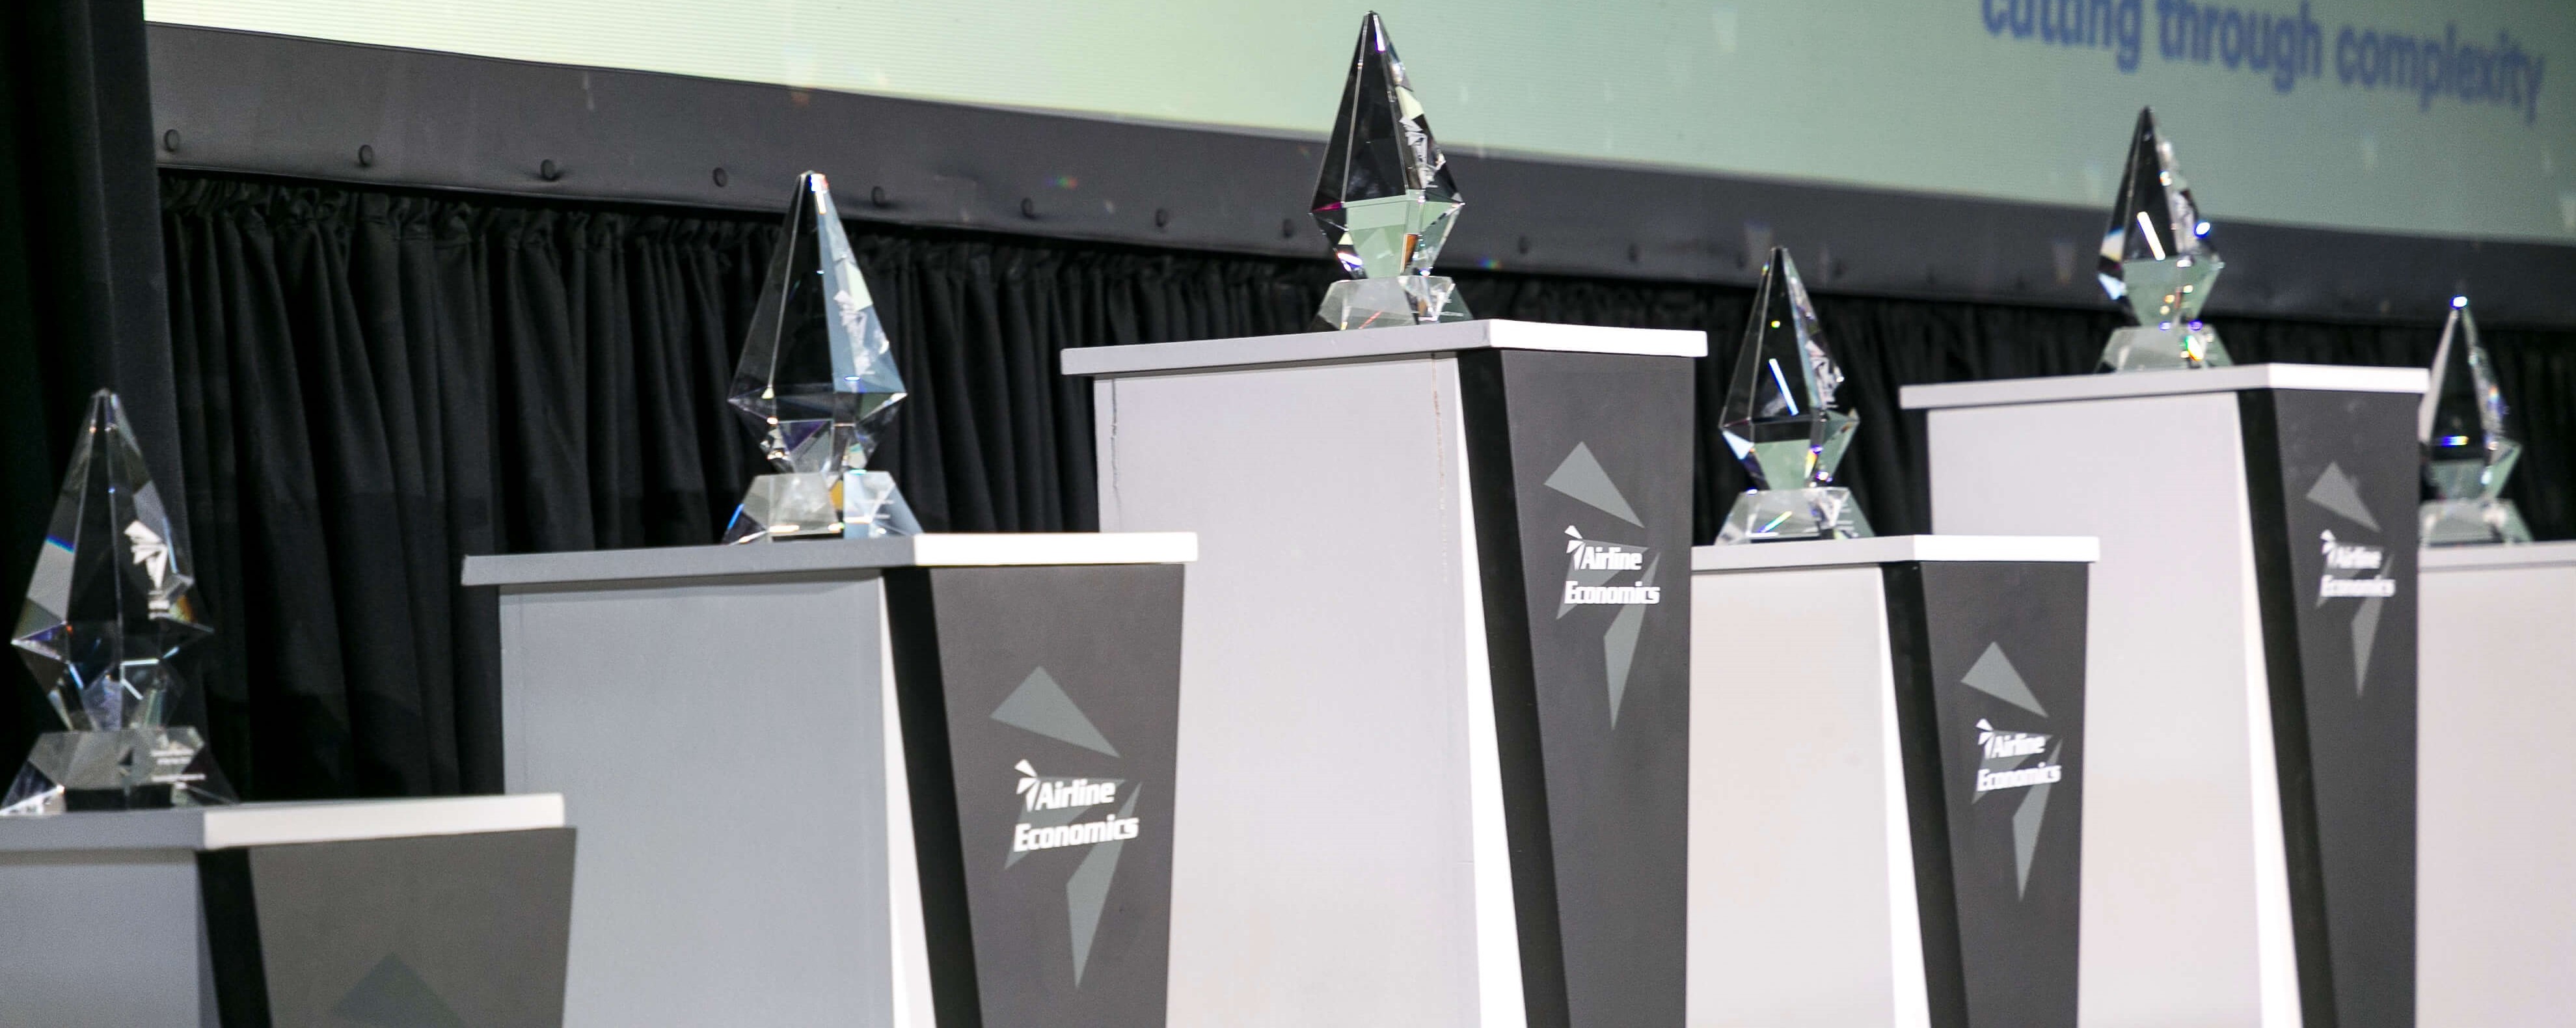 The Airline Economics Aviation 100 Awards